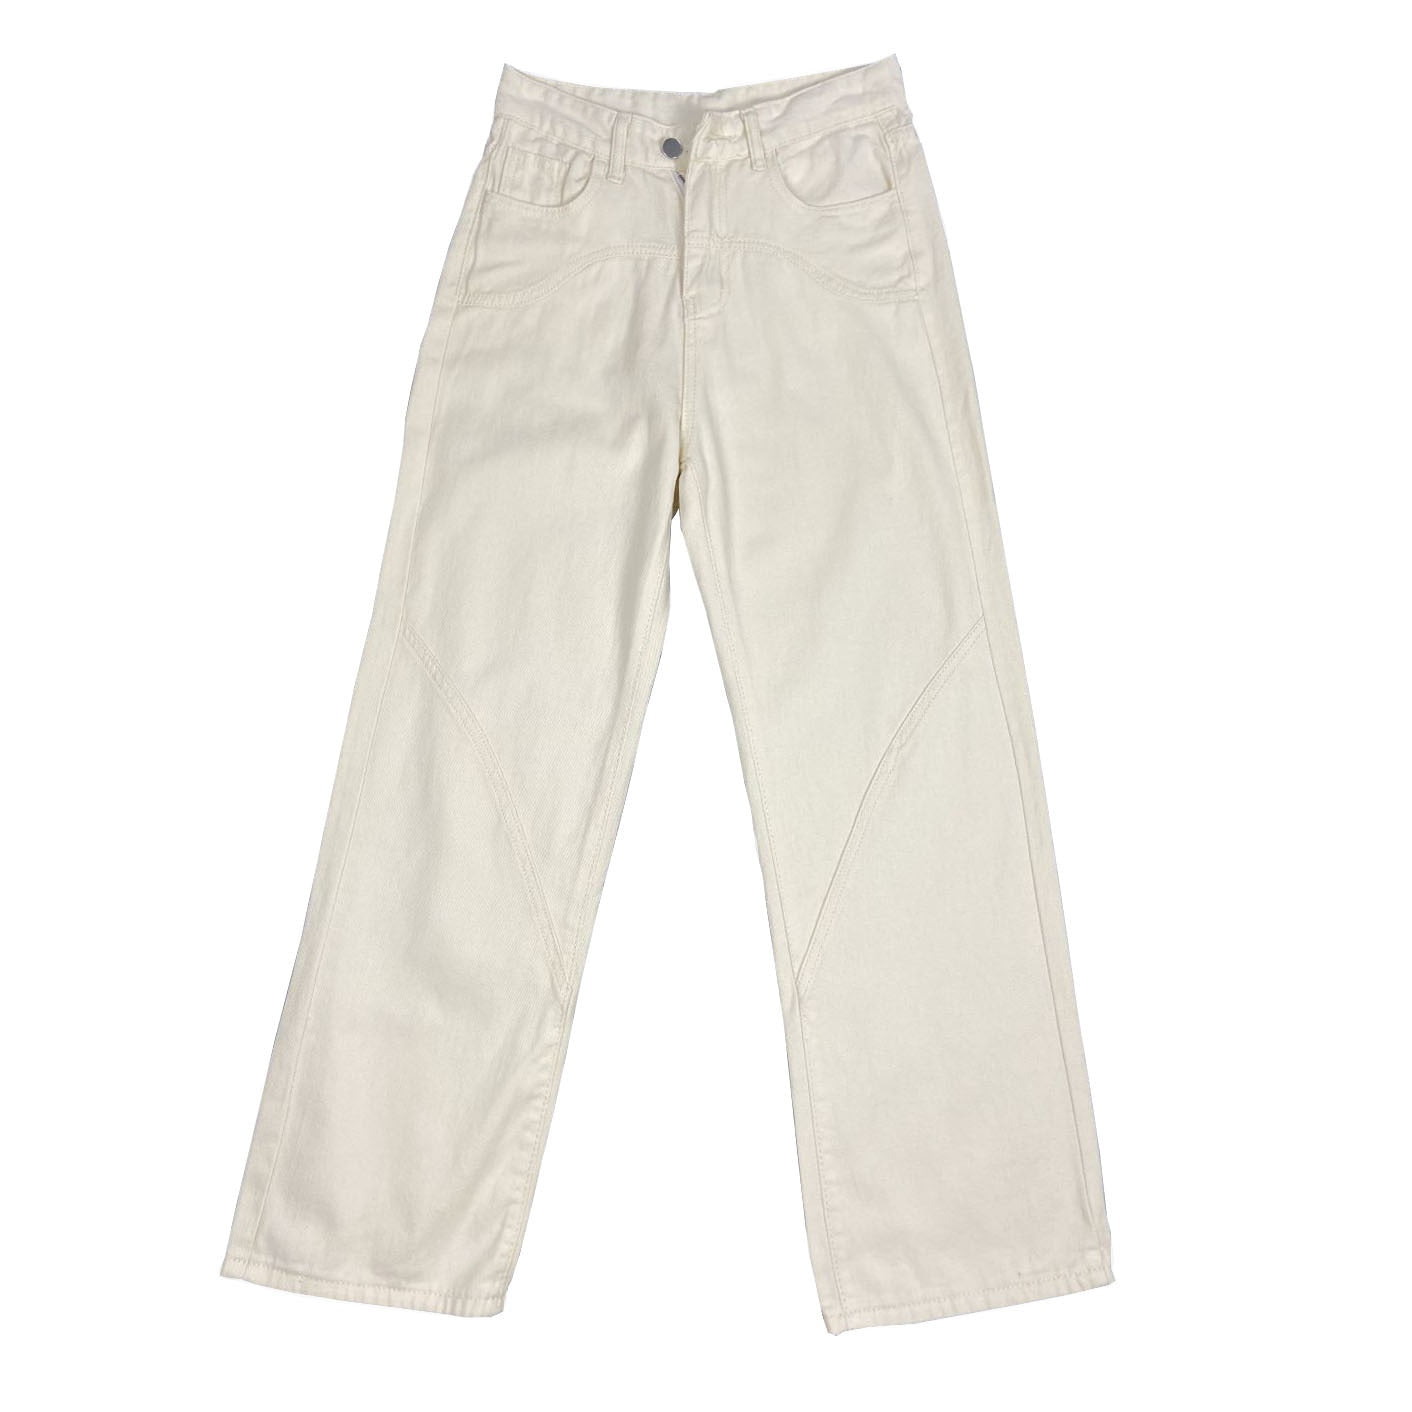 Lizakosht New Casual Rice White Straight Jeans Harajuku Solid Color Fashion Joker Vibe Wind Pants Summer Women's Vintage Y2k Clothing